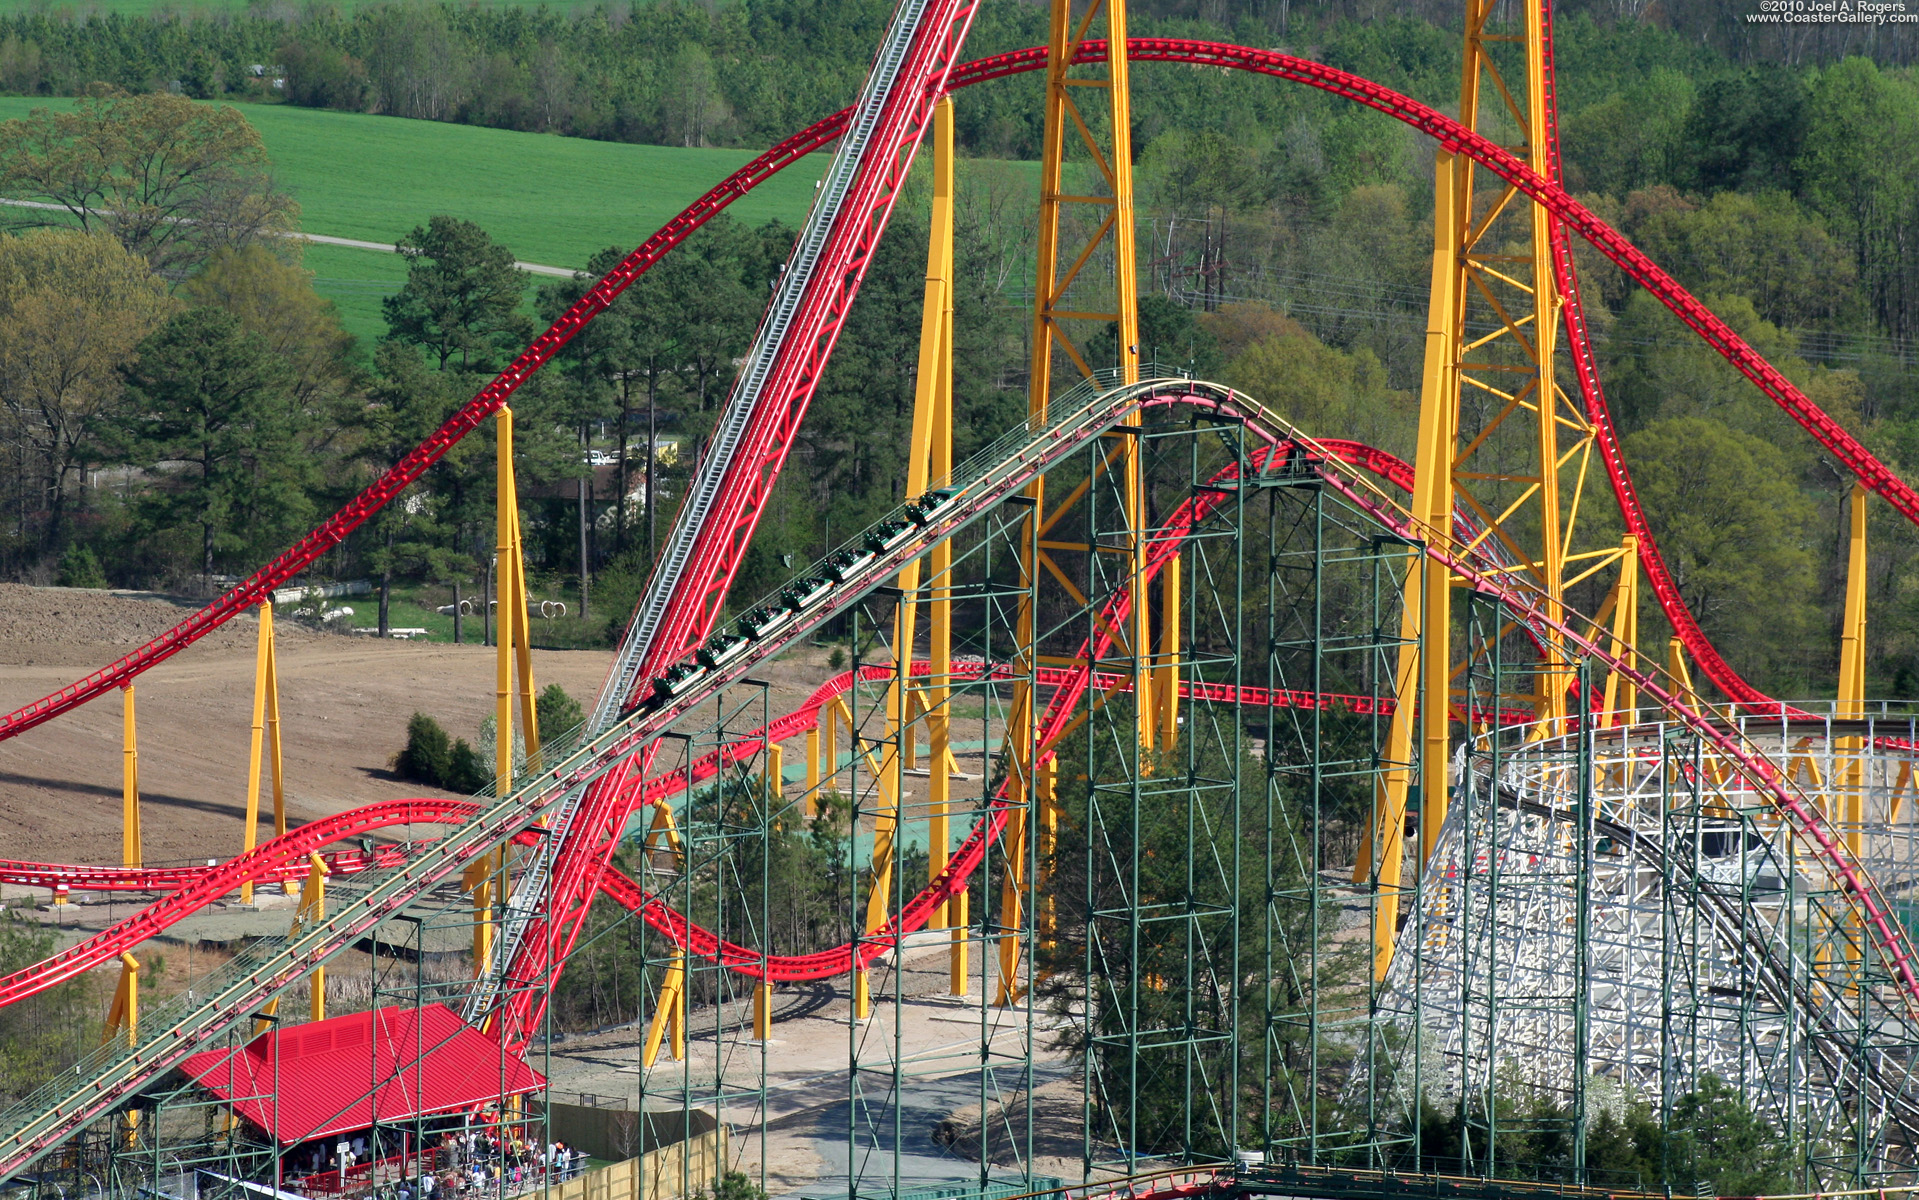 Aerial view of roller coaster near Richmond, Virginia.